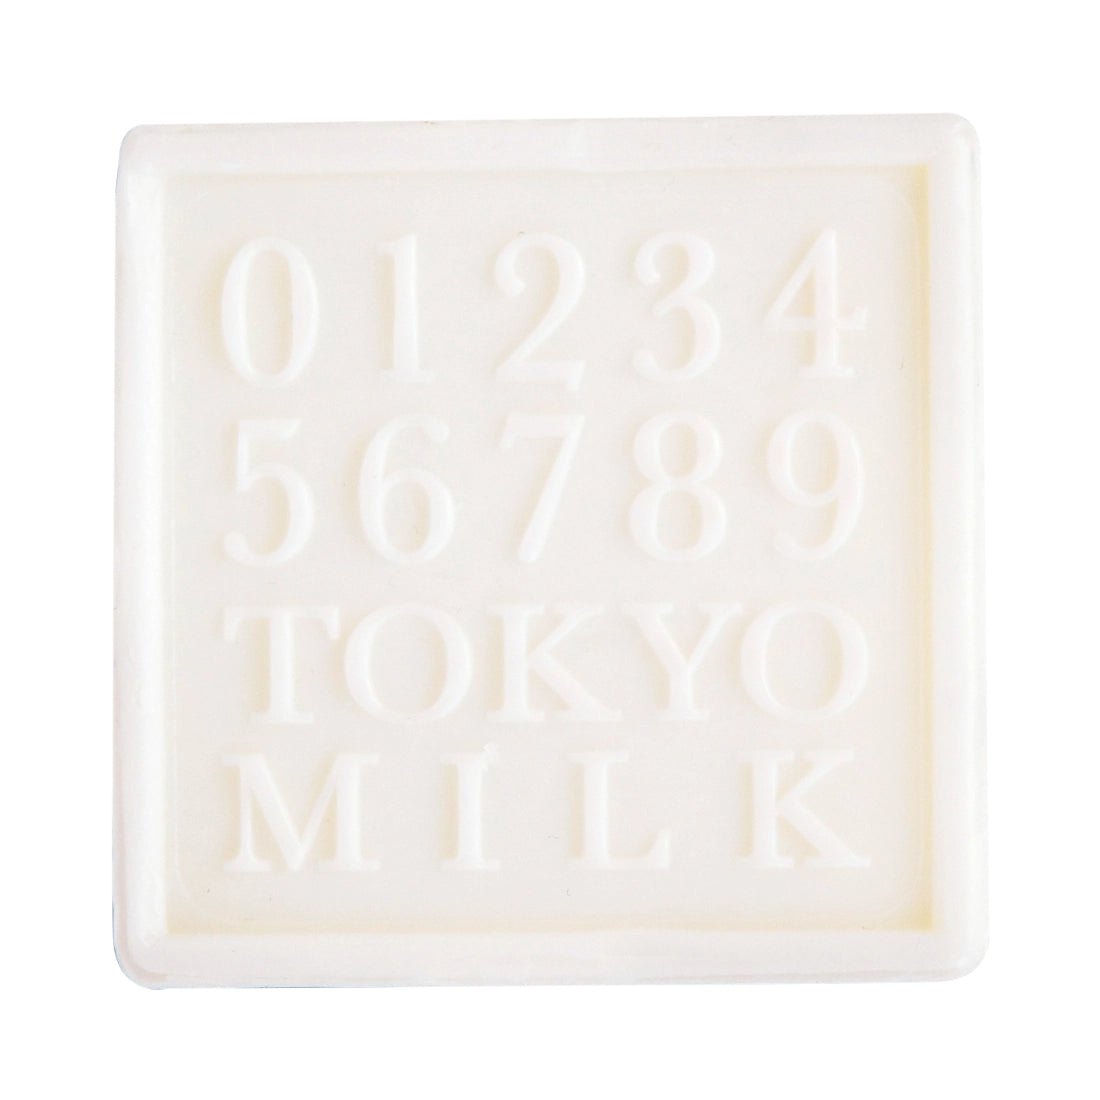 Tokyomilk "You Totally Rule" Finest Perfumed Soap – Green Tea Fragrance - 4oz